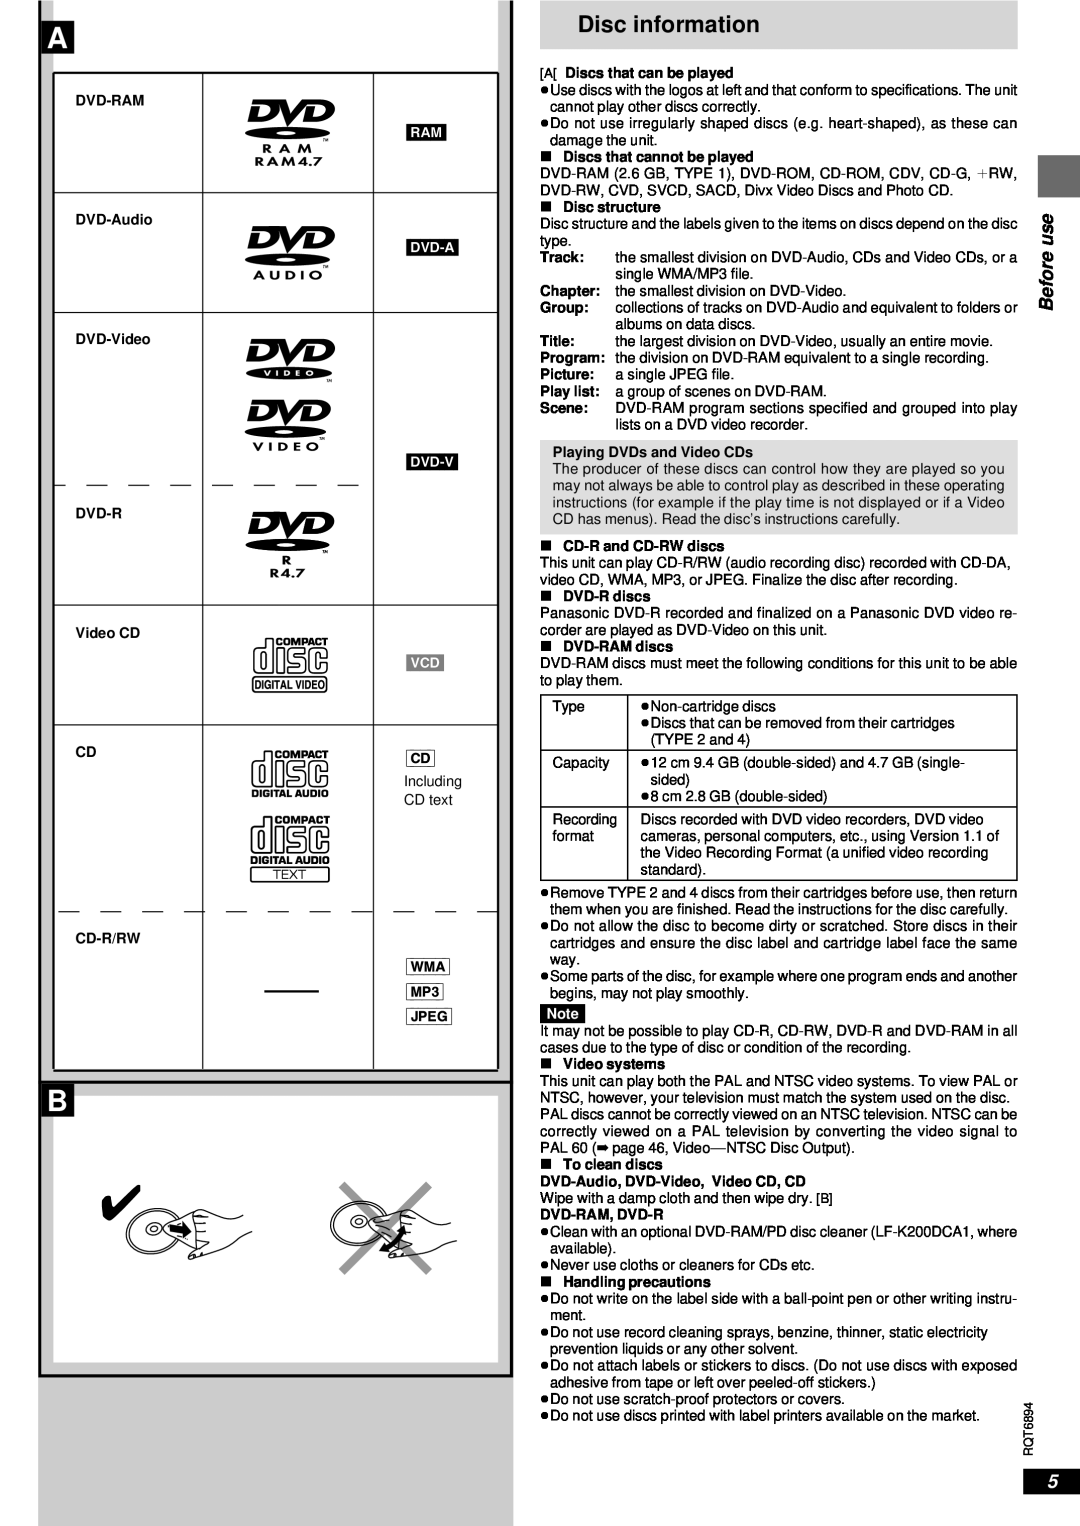 Technics SC-DV290 manual Dvd-A, Dvd-V, Disc information, Jpeg 